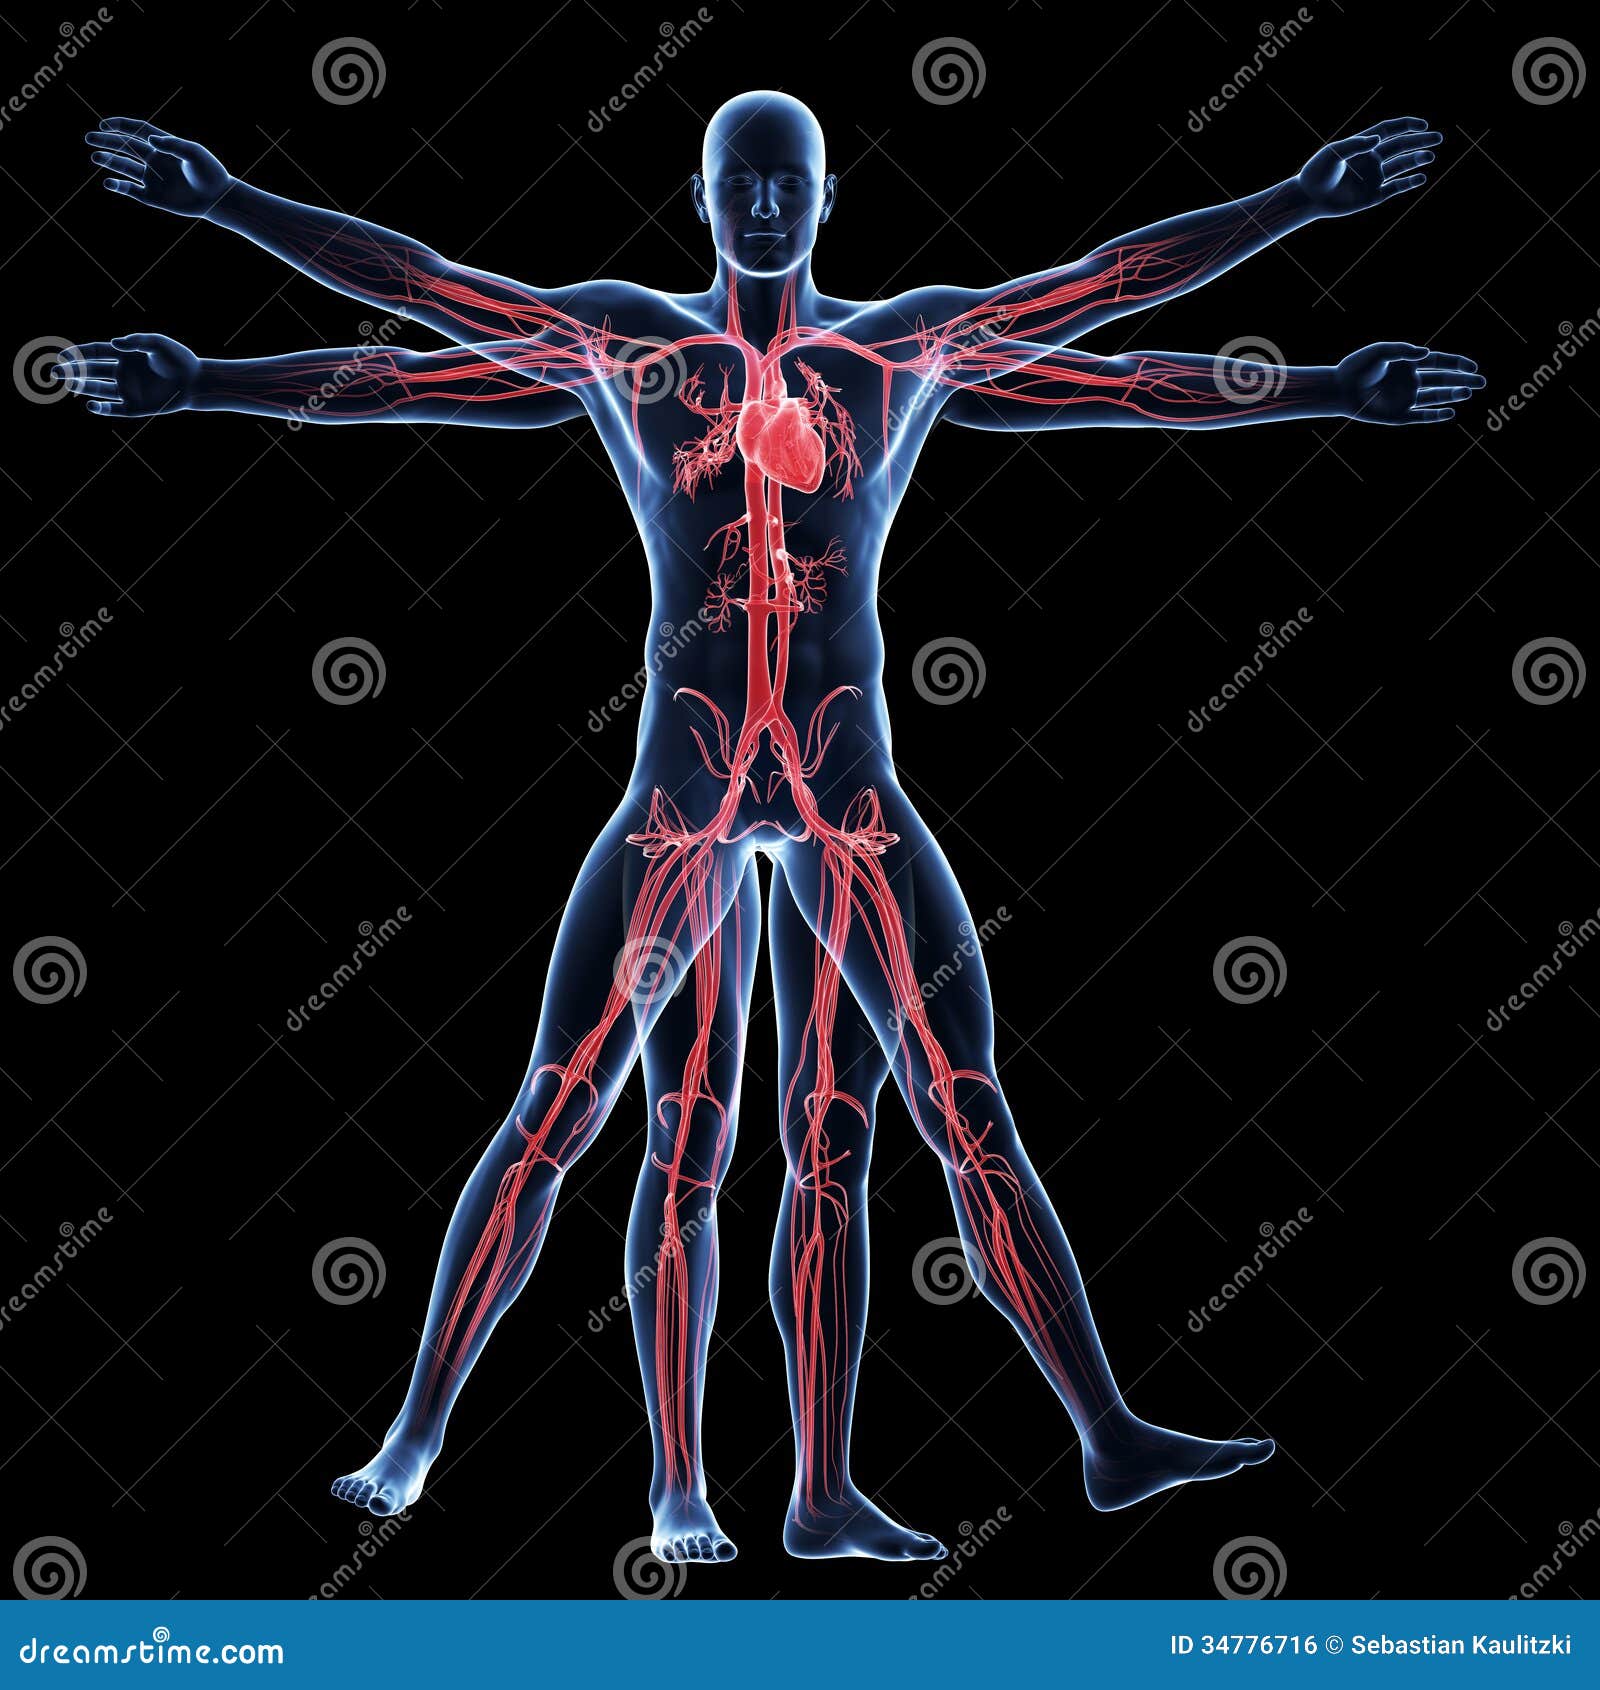 vitruvian man - vascular system